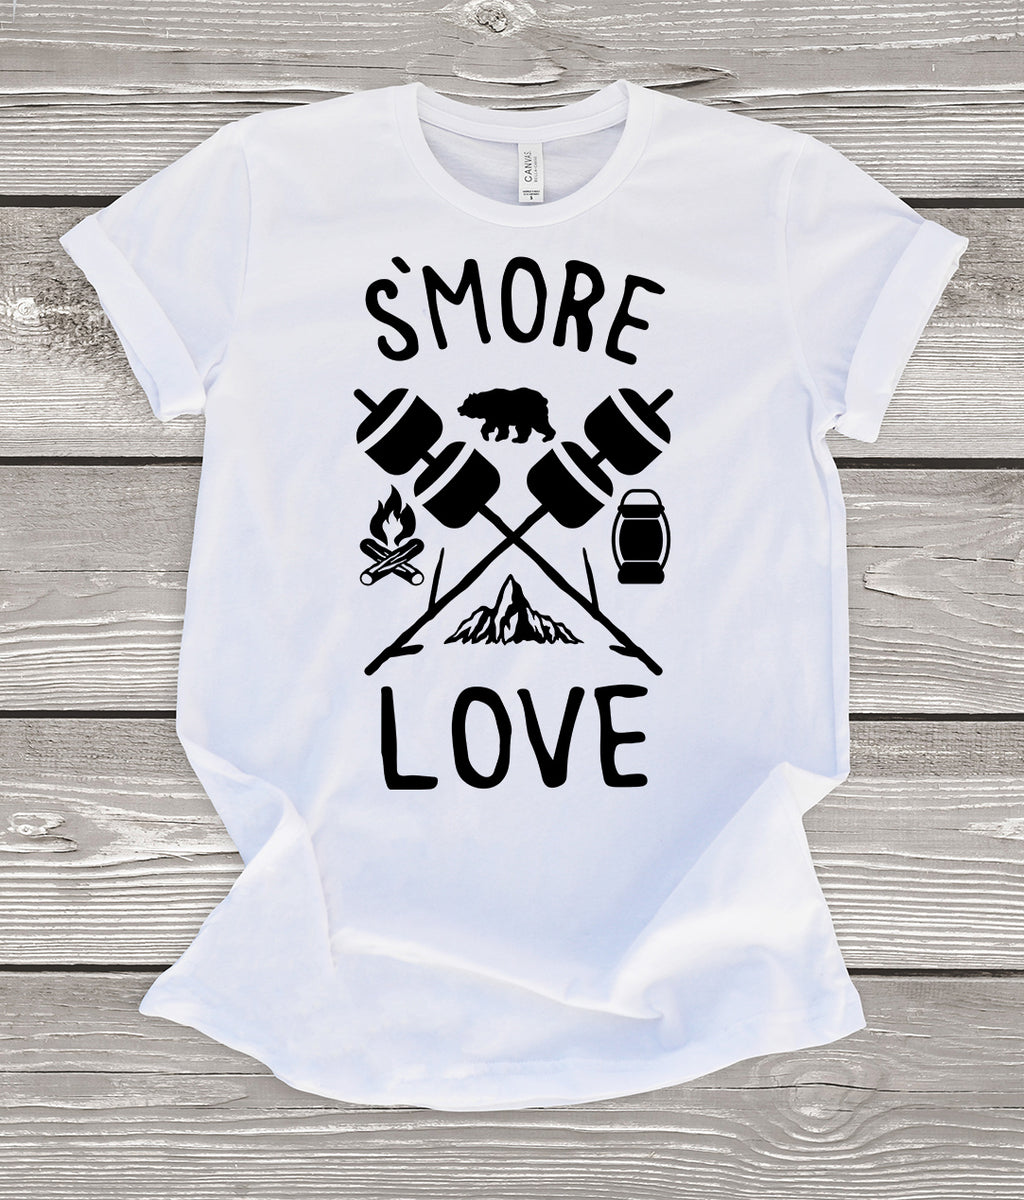 S'more Love T-Shirt